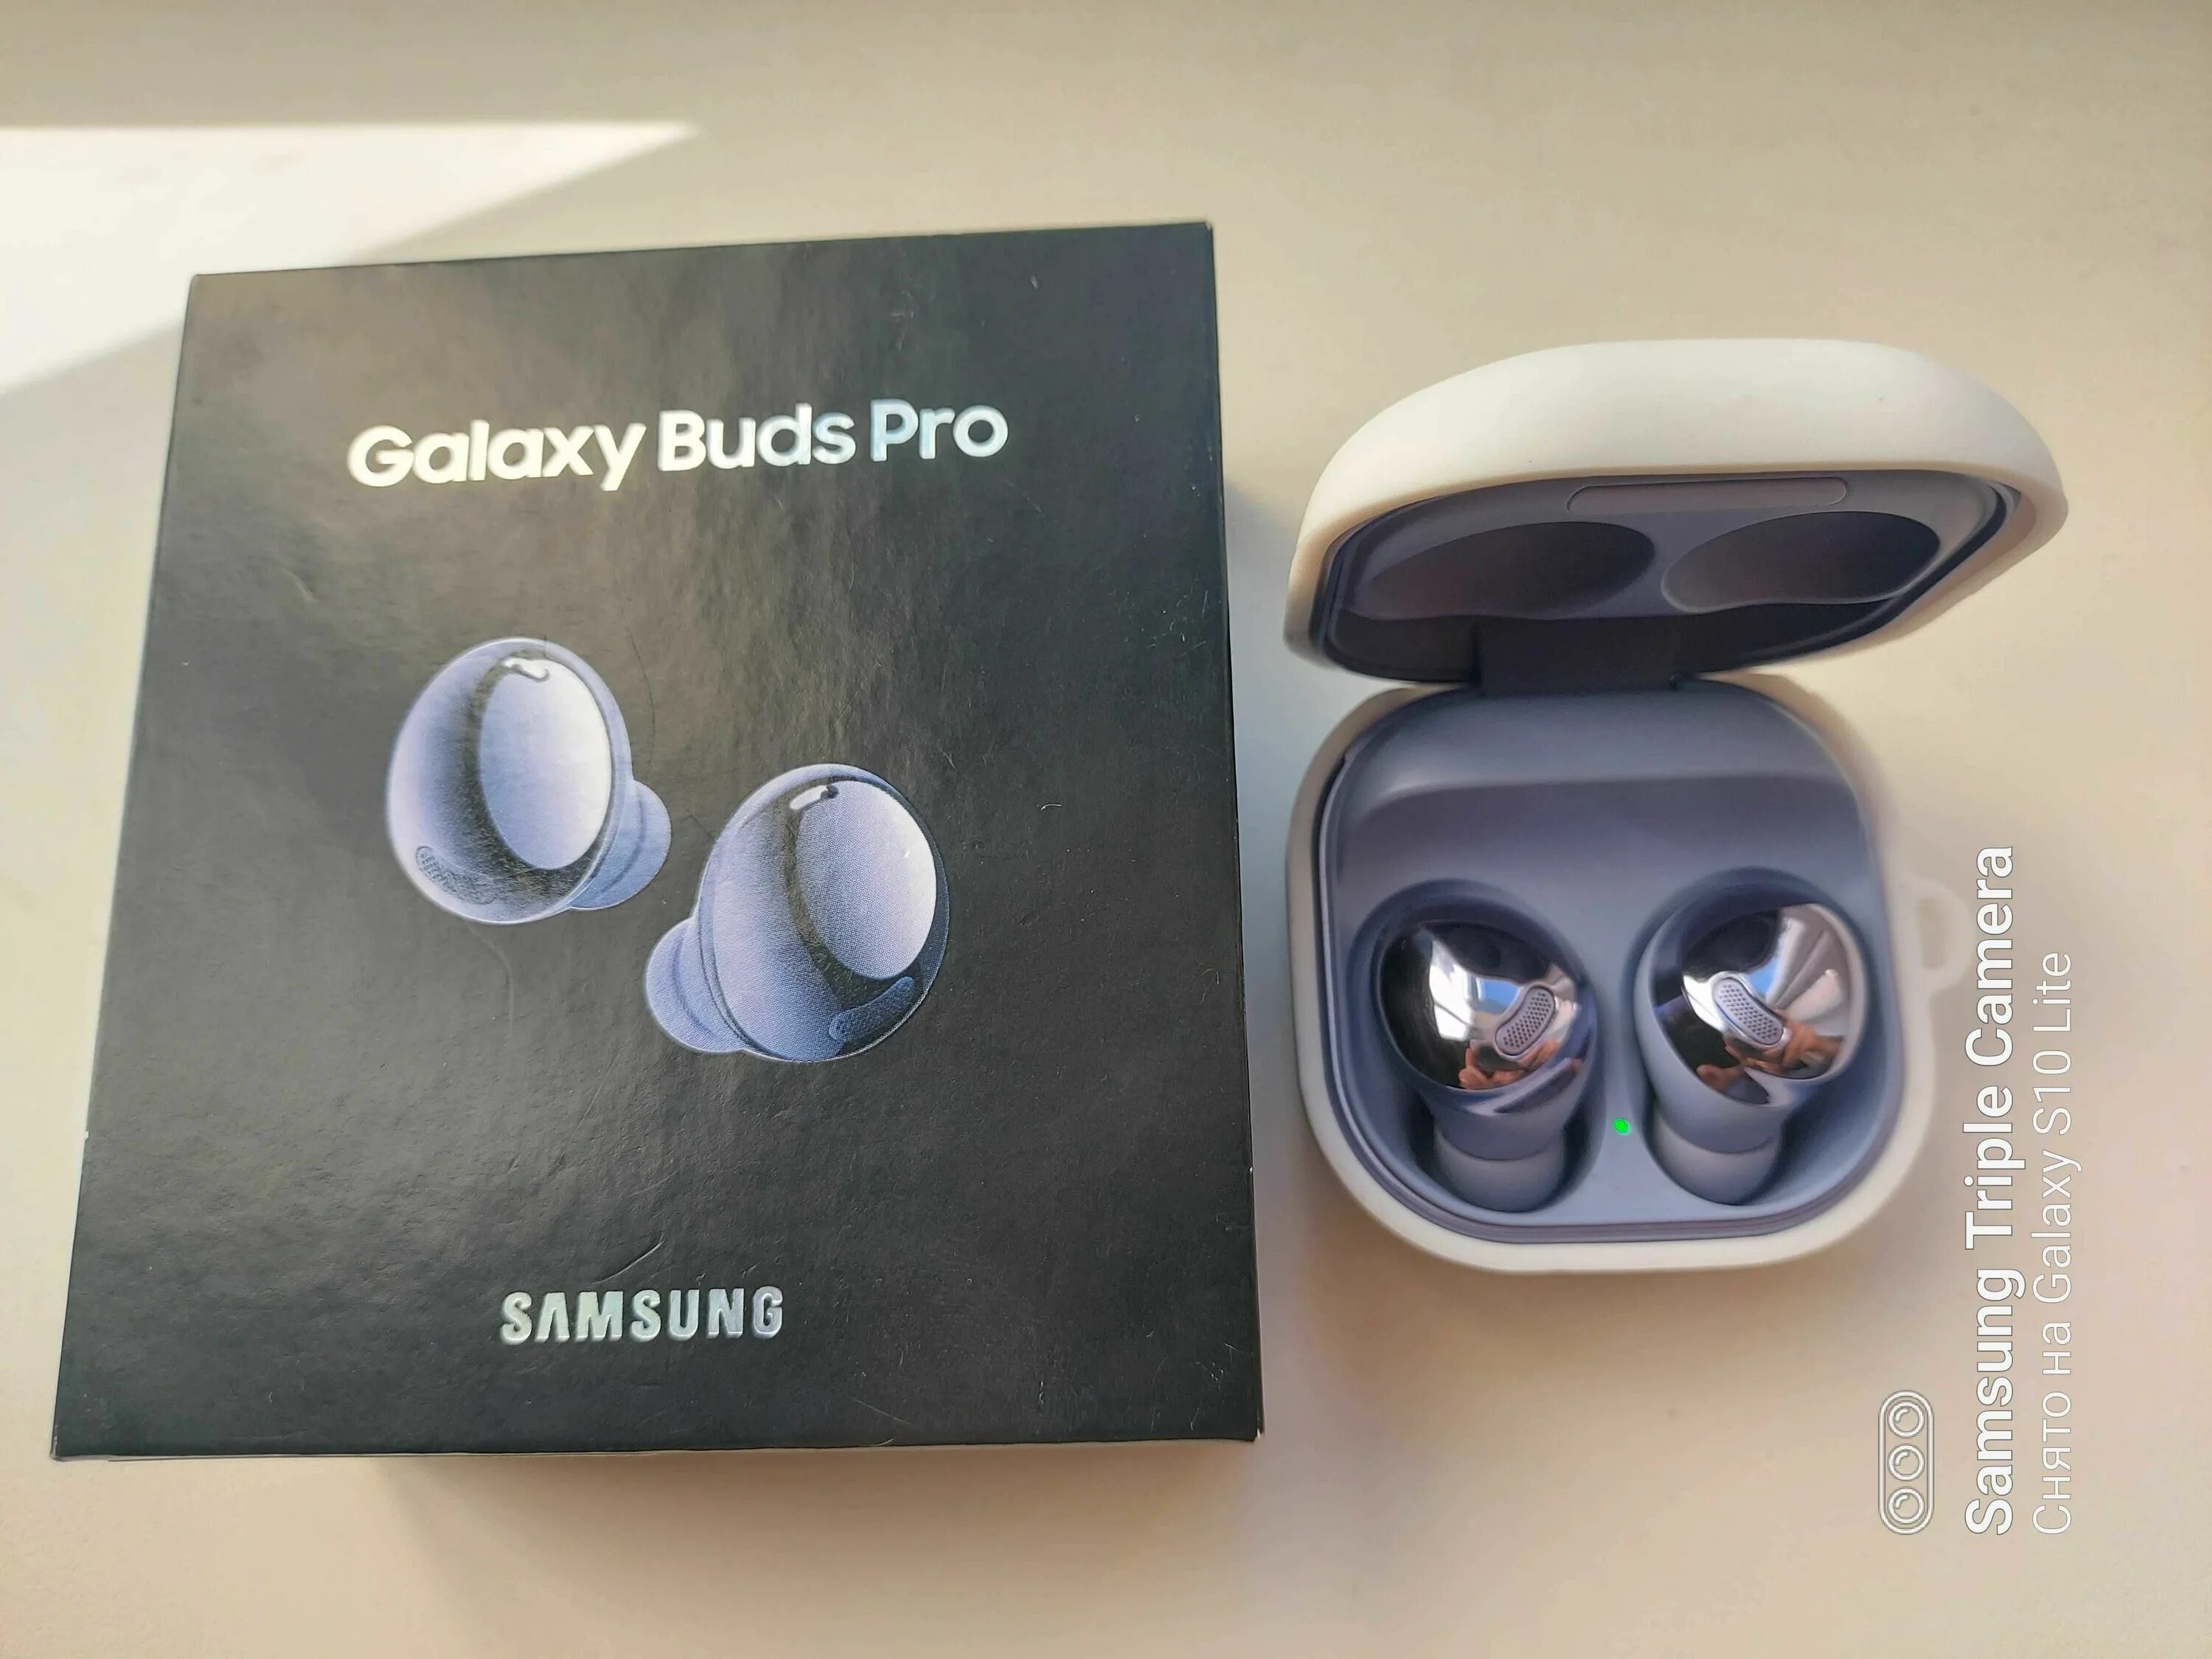 Купить галакси бадс про. Galaxy Buds Pro. Samsung Galaxy Buds Pro фиолетовые. Galaxy Buds Pro Violet. Samsung Galaxy Buds Pro Attic Violet (SM-r190nzvacis).